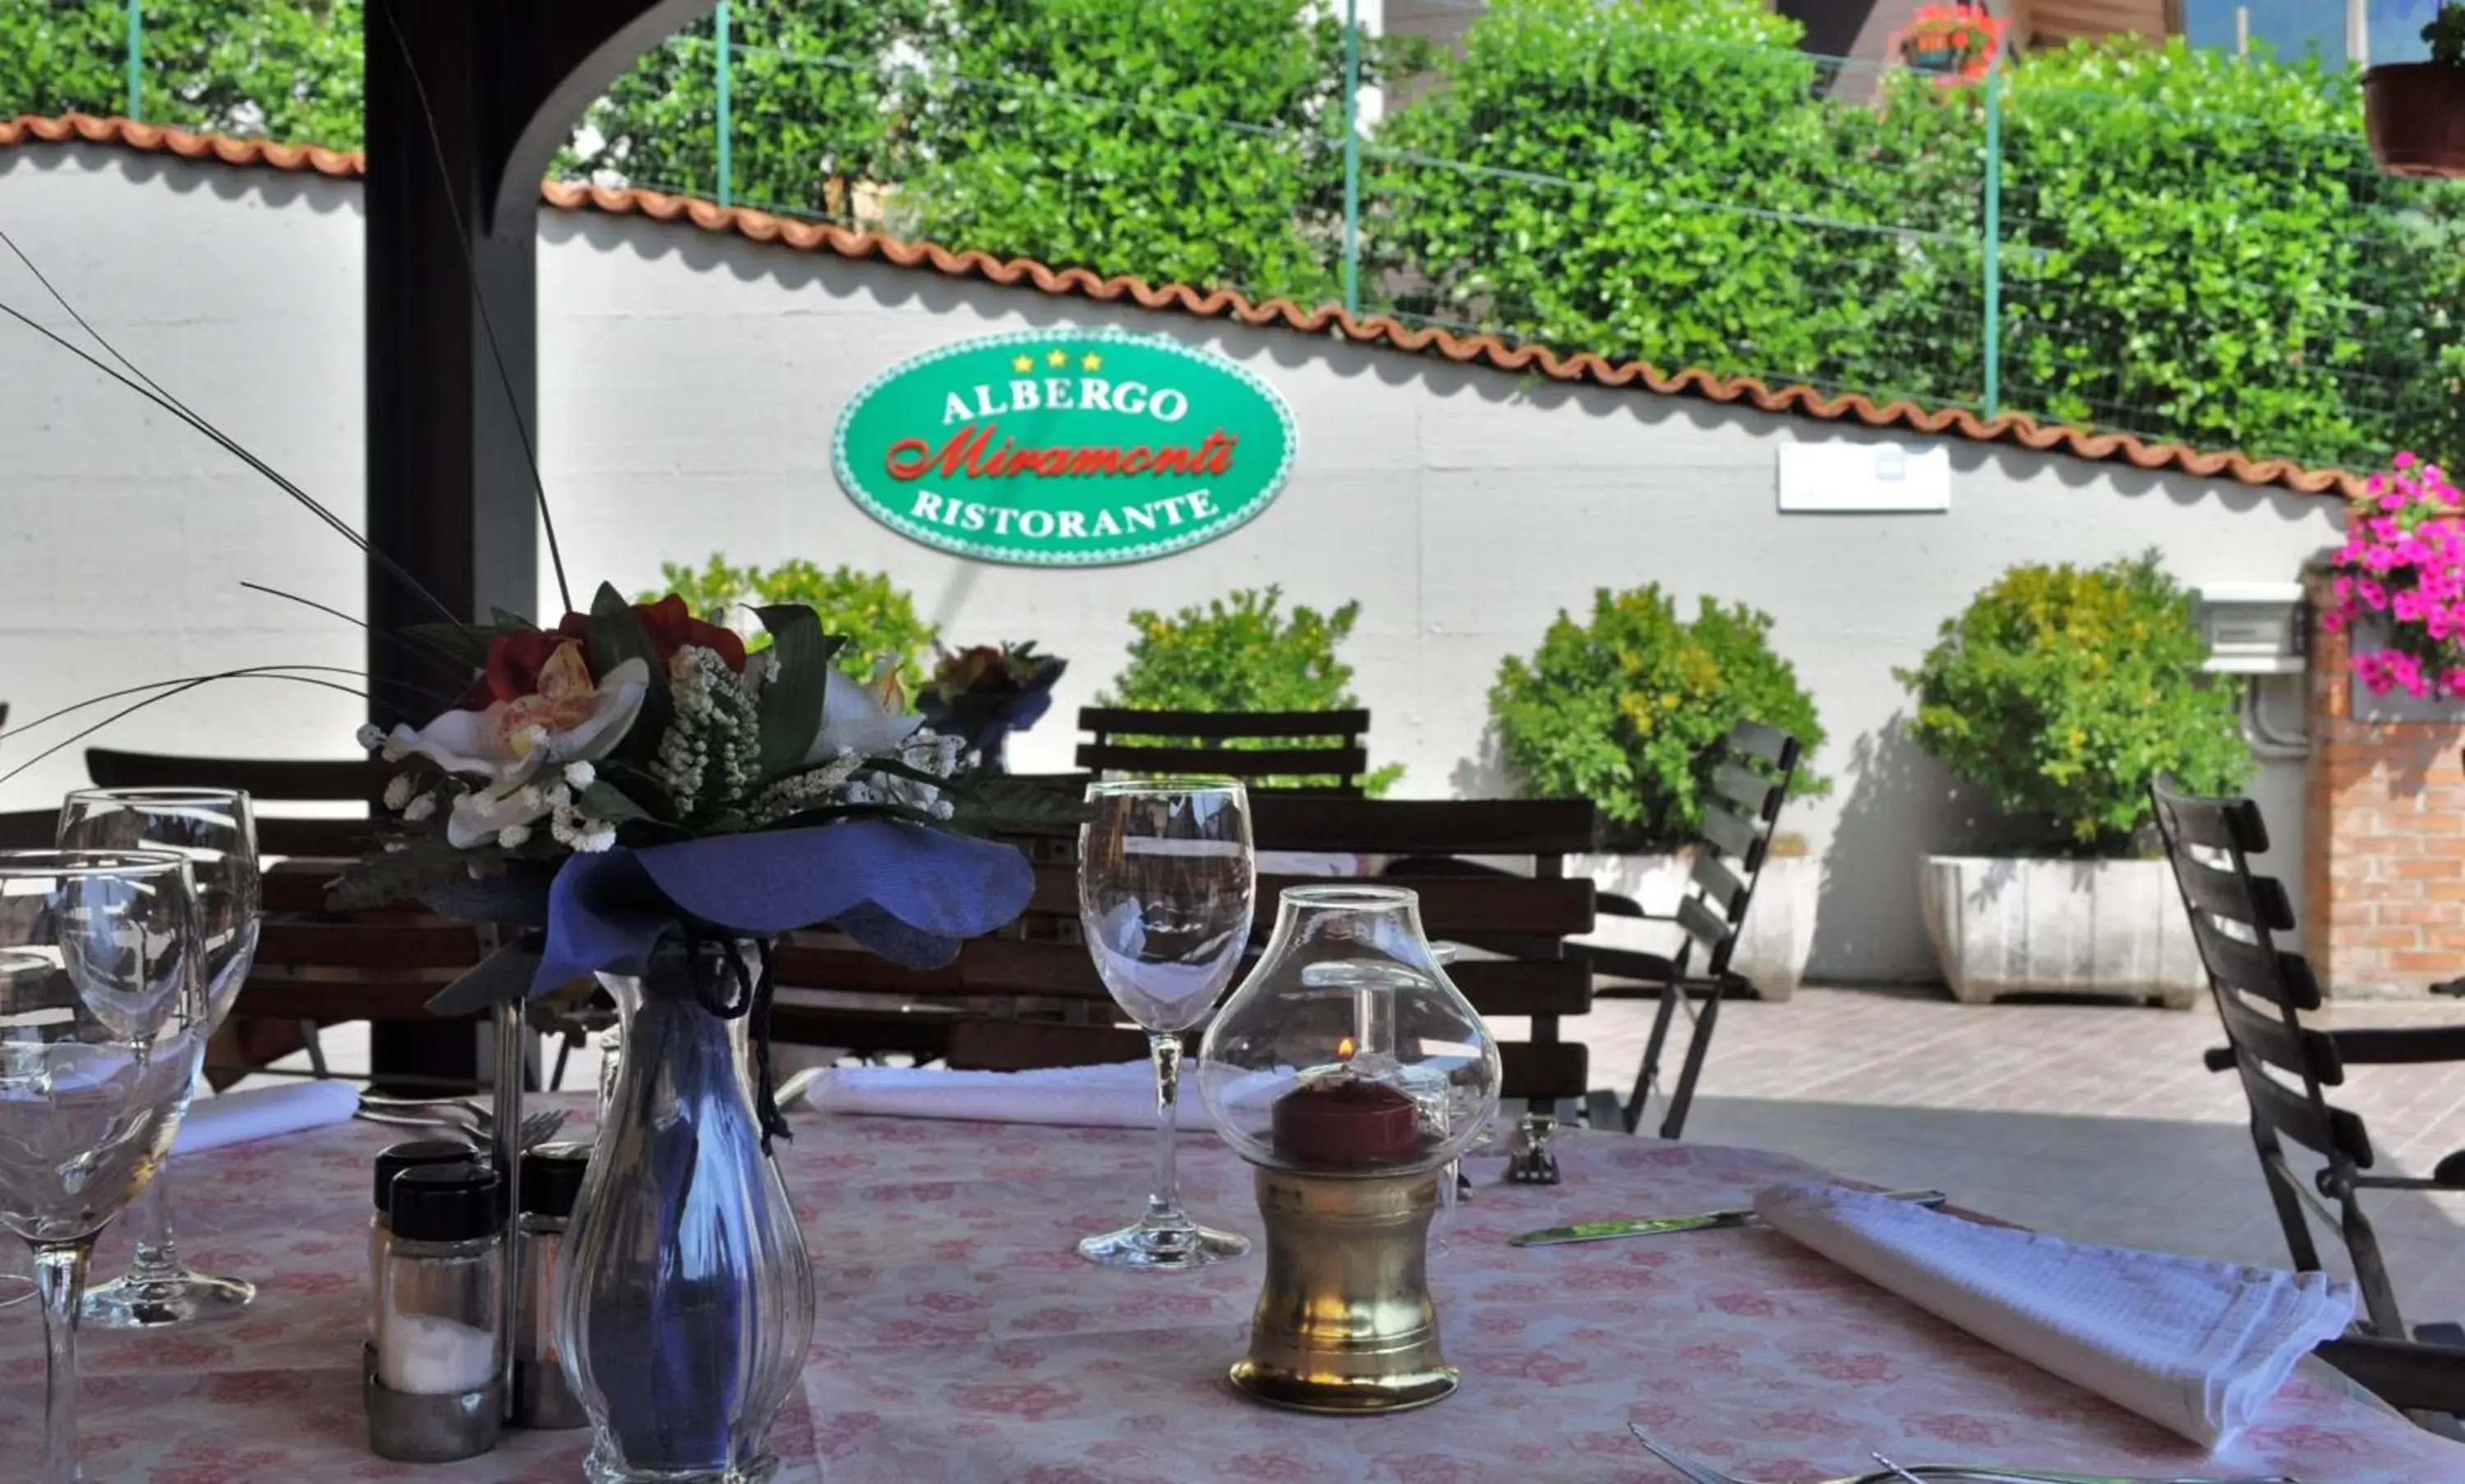 Restaurant/places to eat in Albergo Miramonti